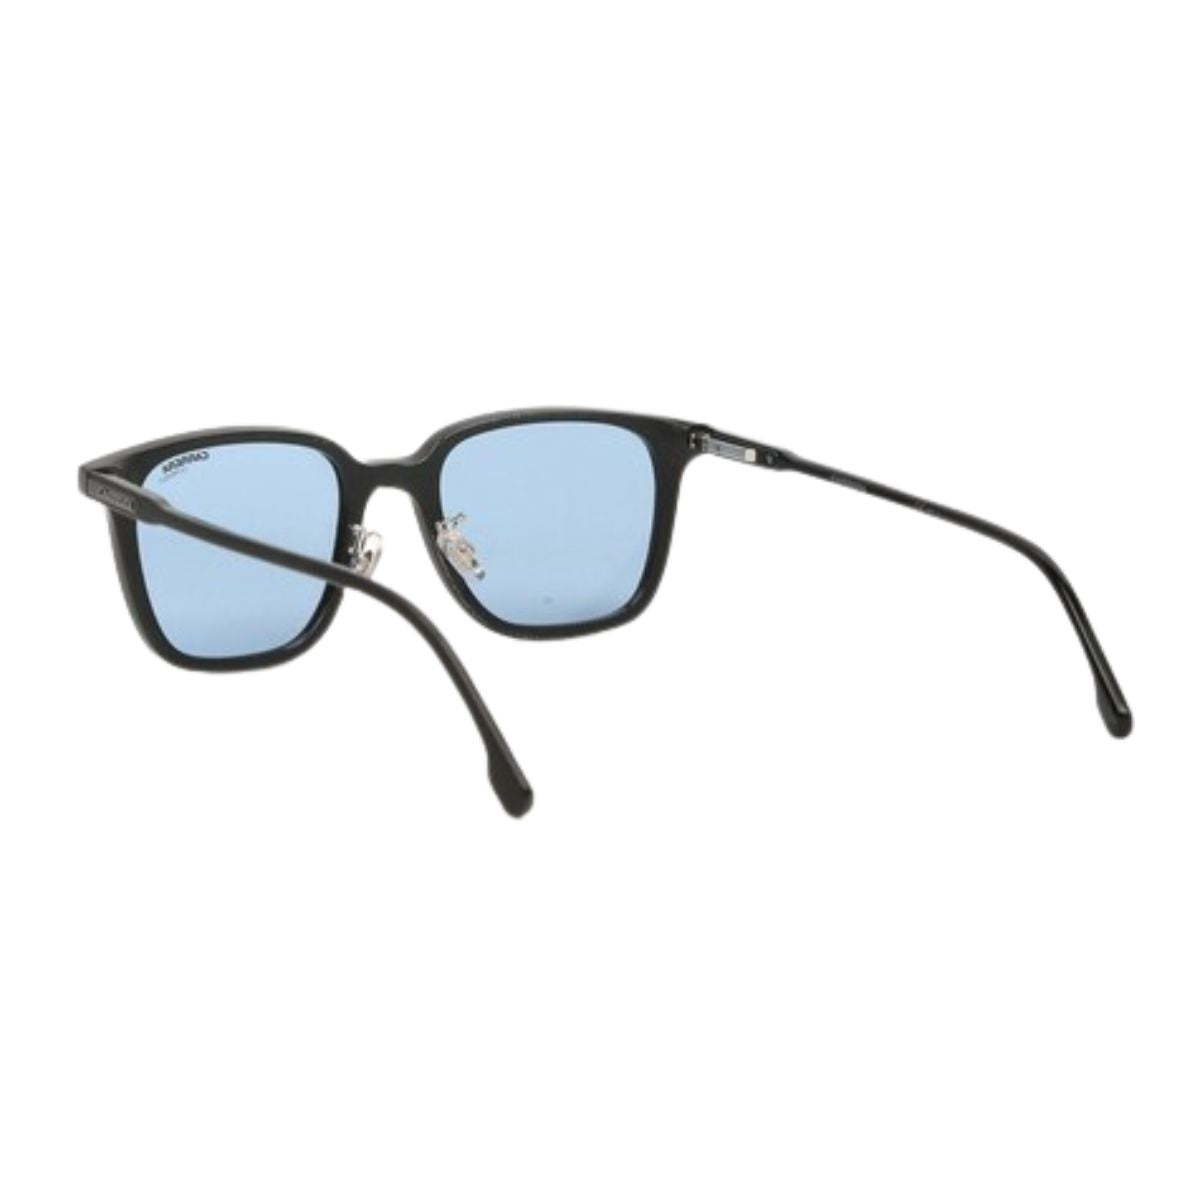 "Carrera Square Sunglasses For Mens At Optorium - Discounted Sunglasses